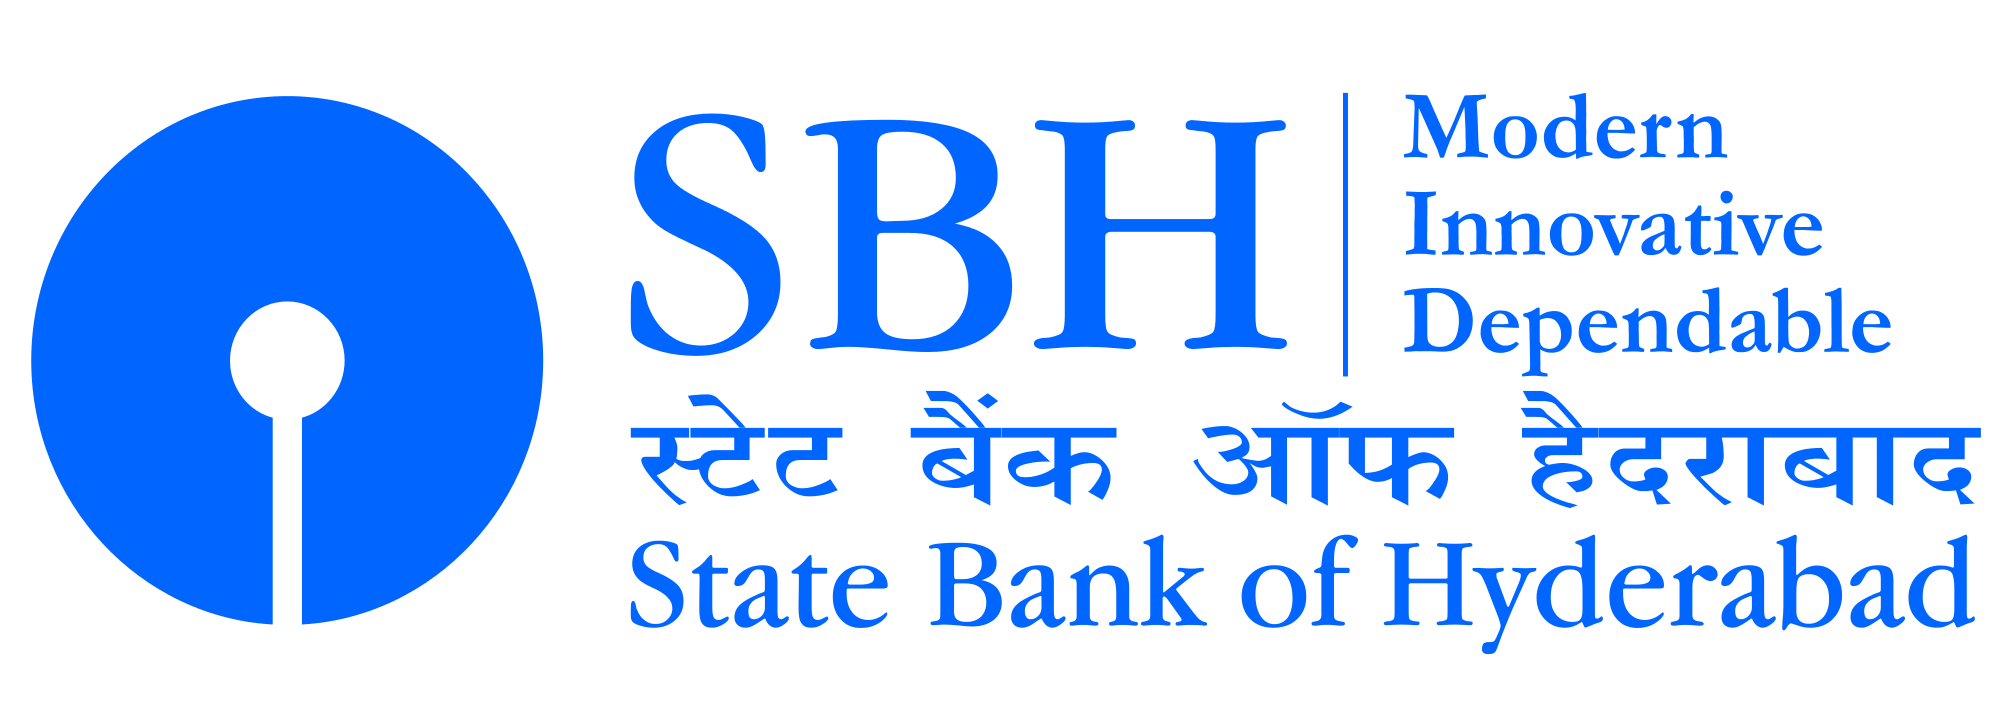 State Bank of Hyderabad Brand Logo